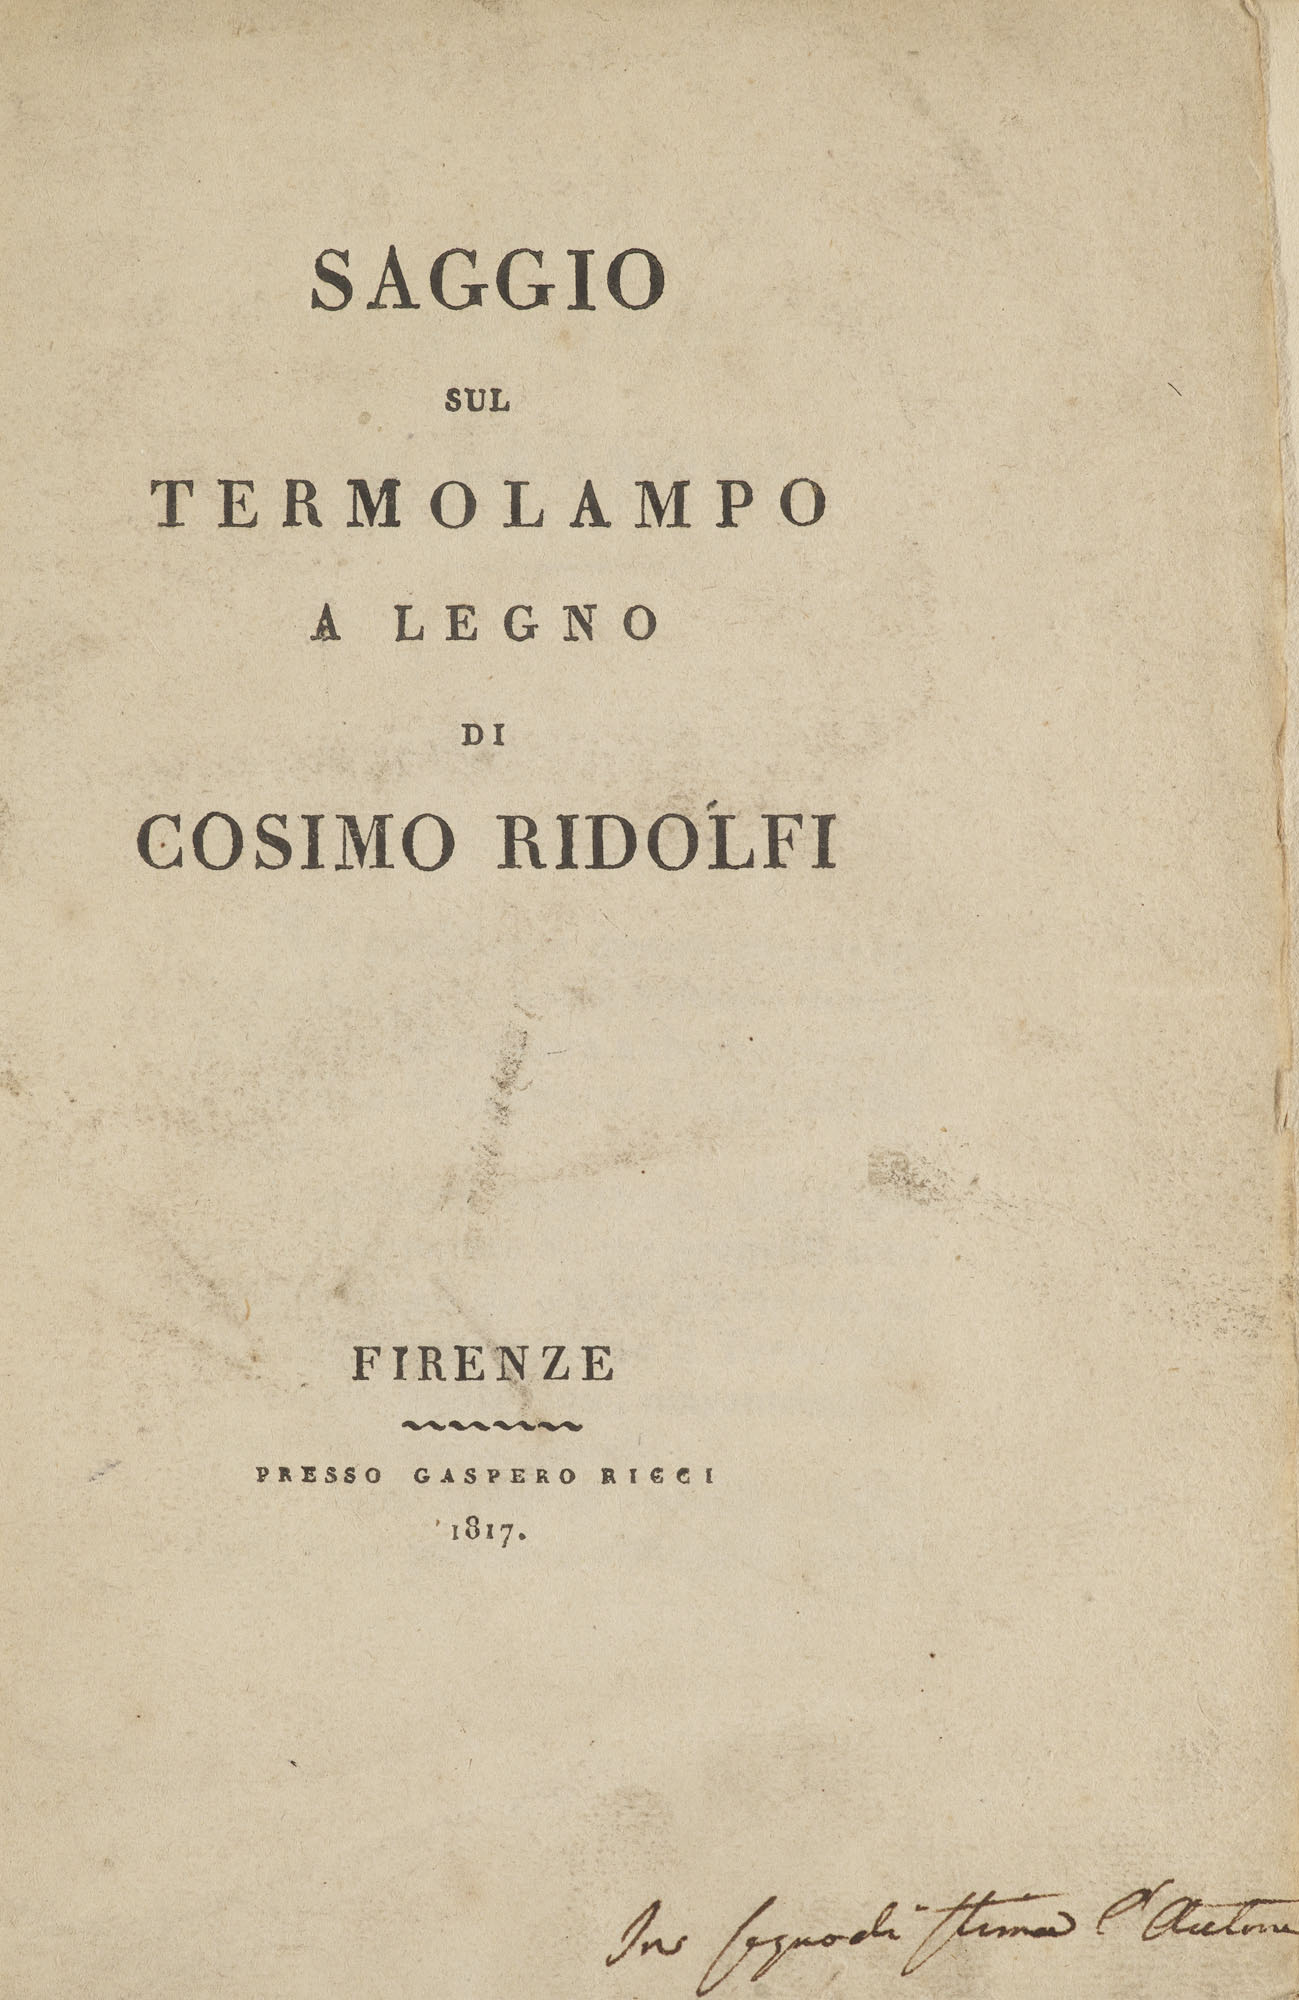 Cosimo Ridolfi. Saggio sul termolampo